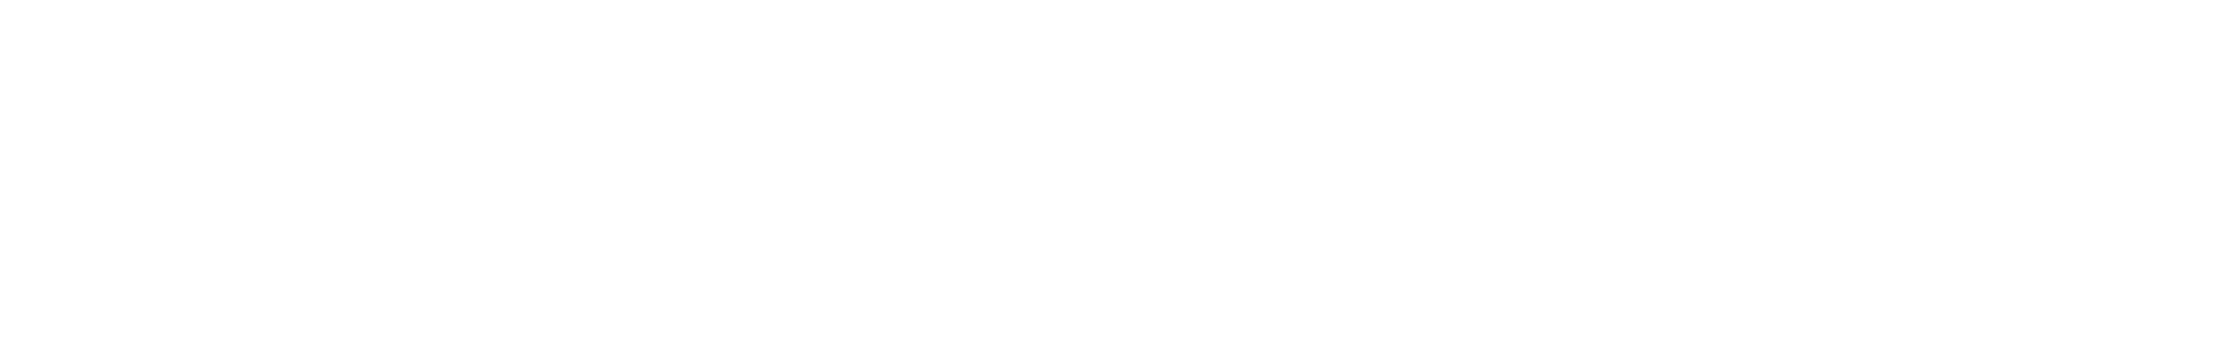 PrimePay Logo - White (1)